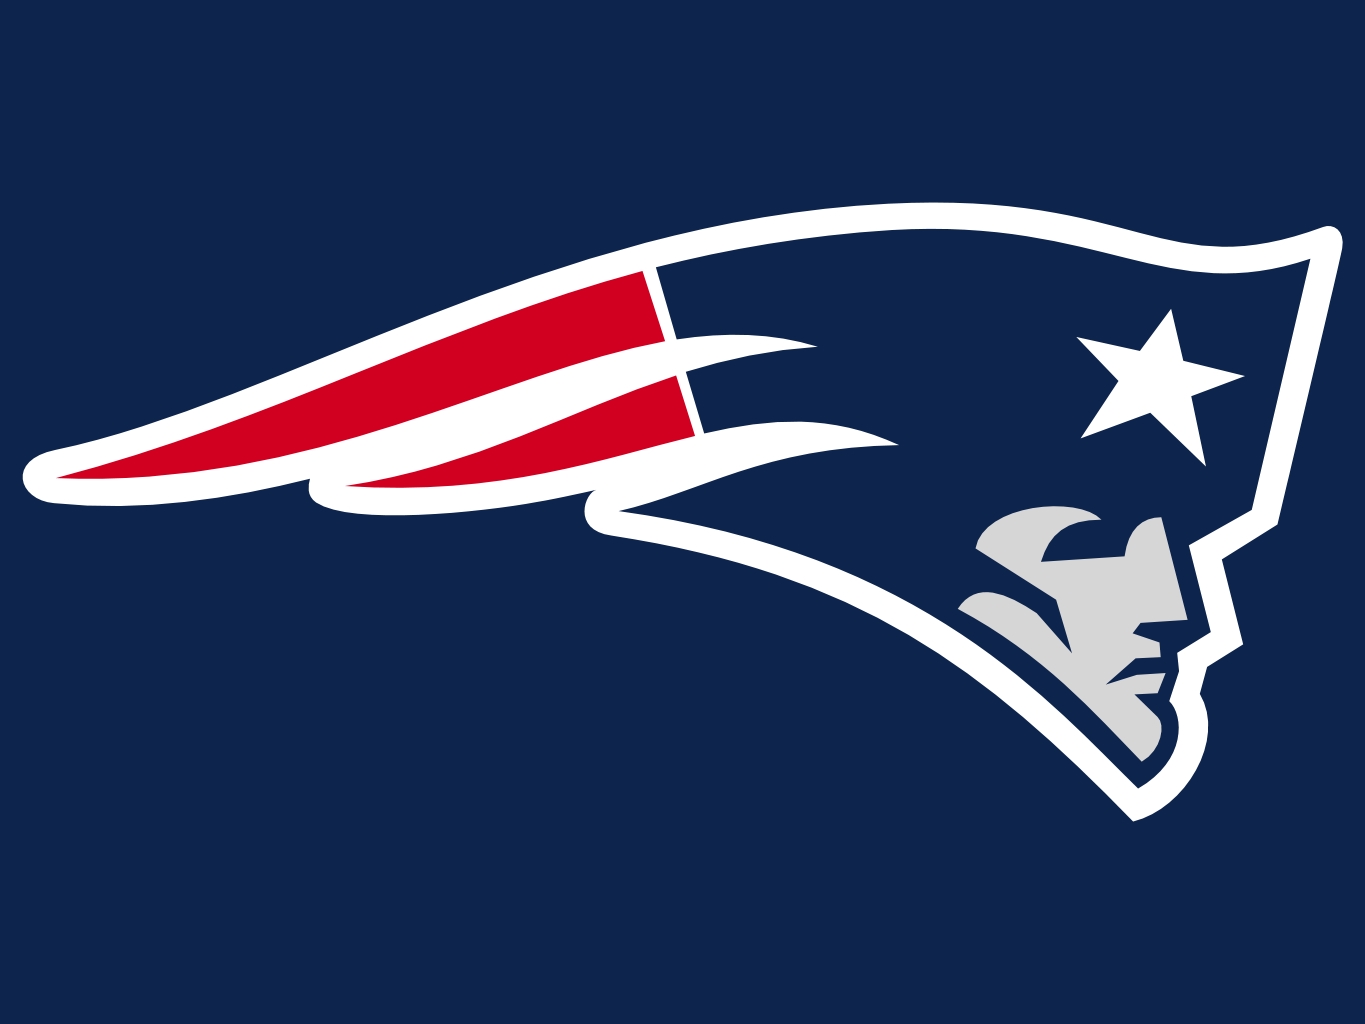 The New England Logo photo - 1